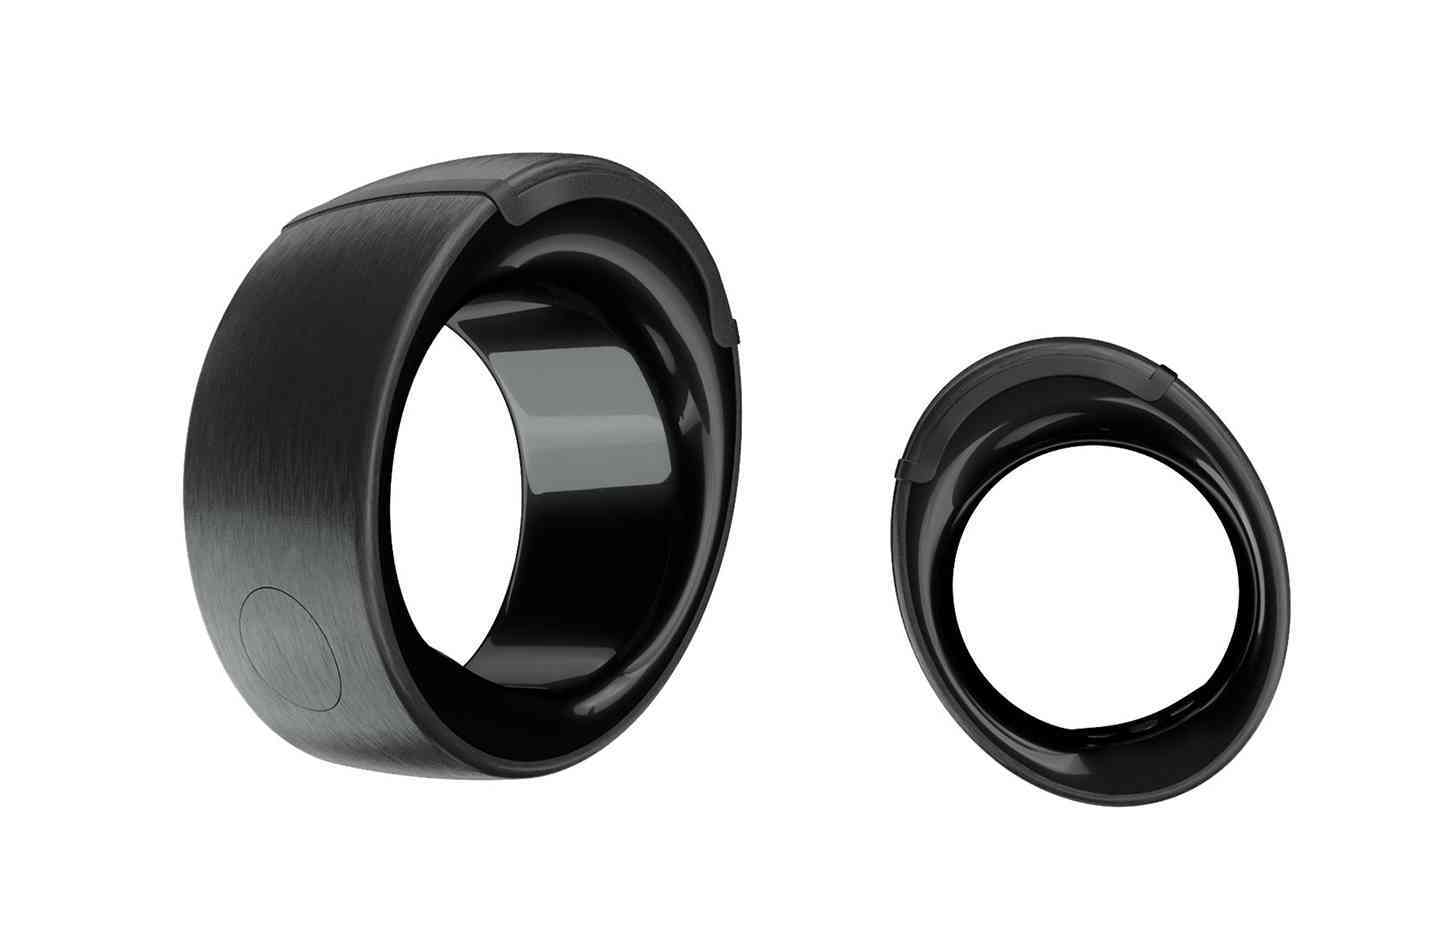 Amazon Echo Loop smart ring